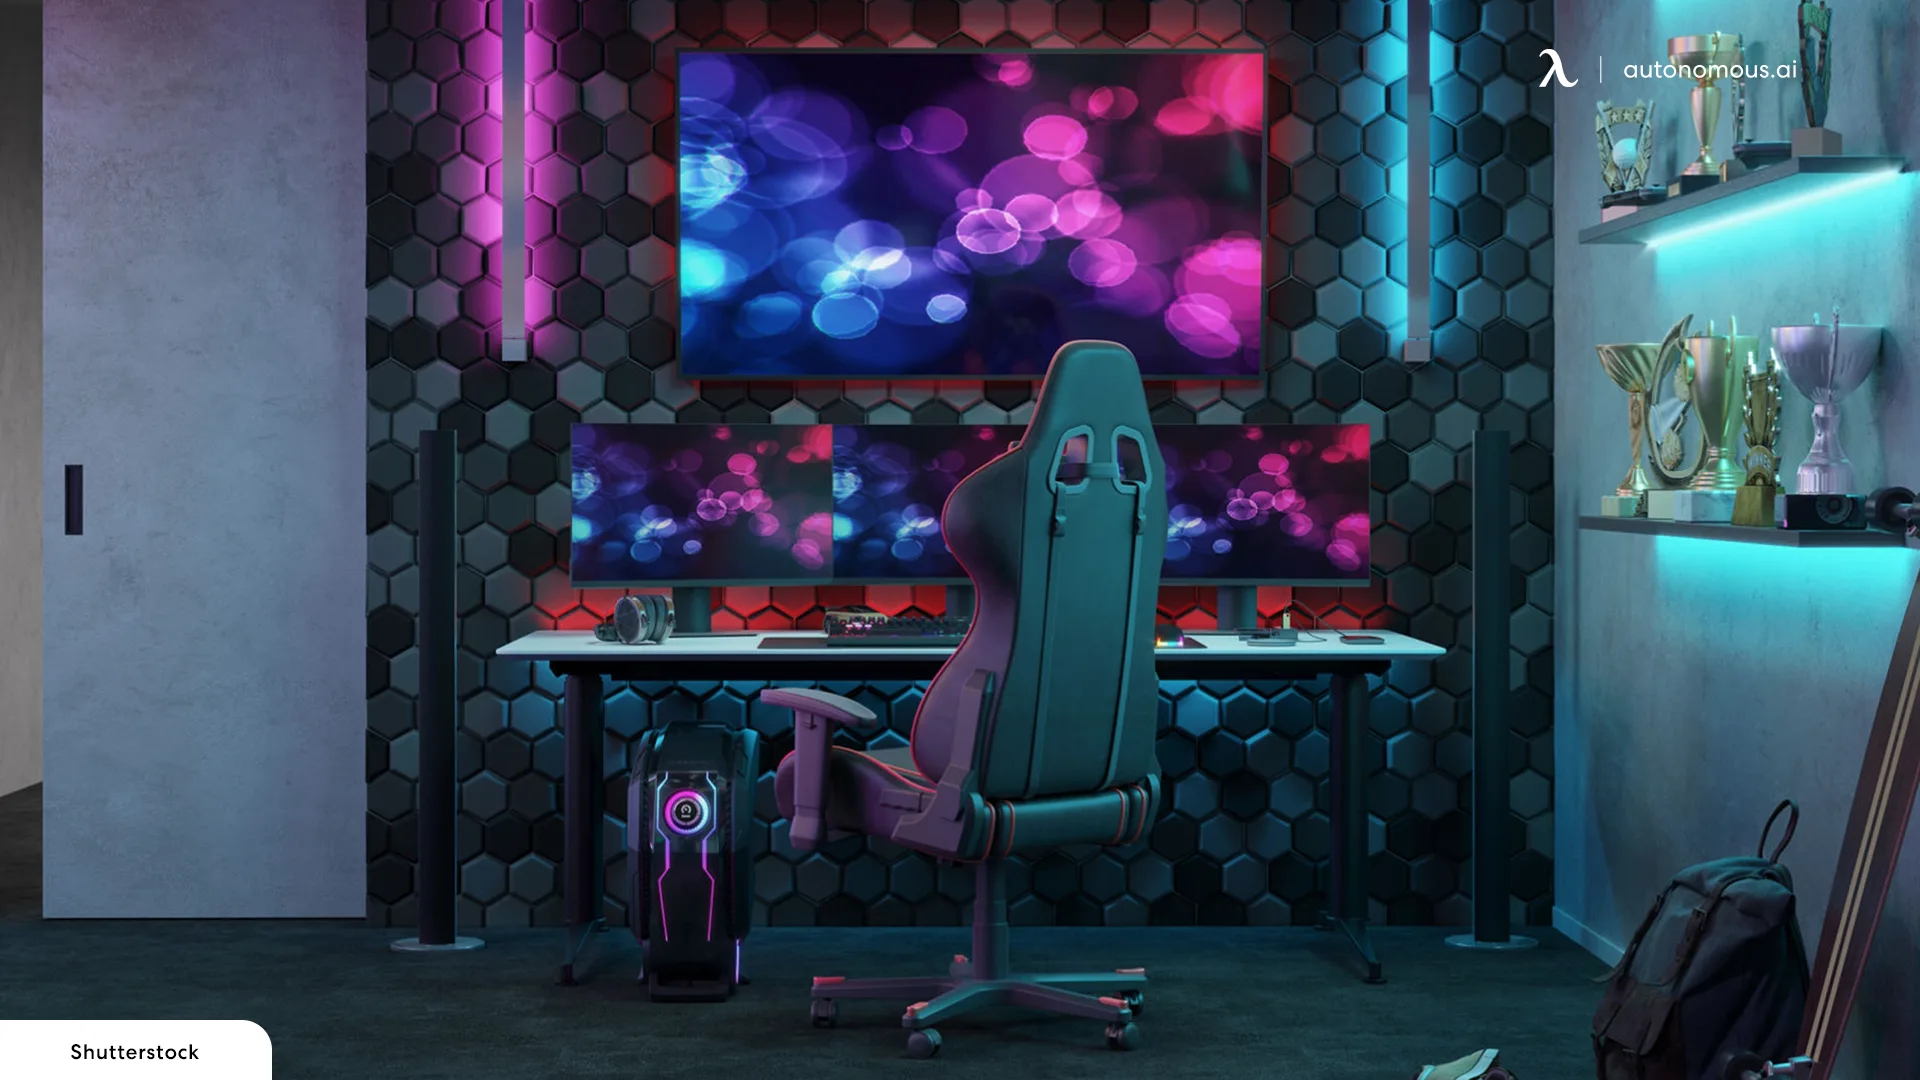 Cyberpunk Gaming Room Light Ideas